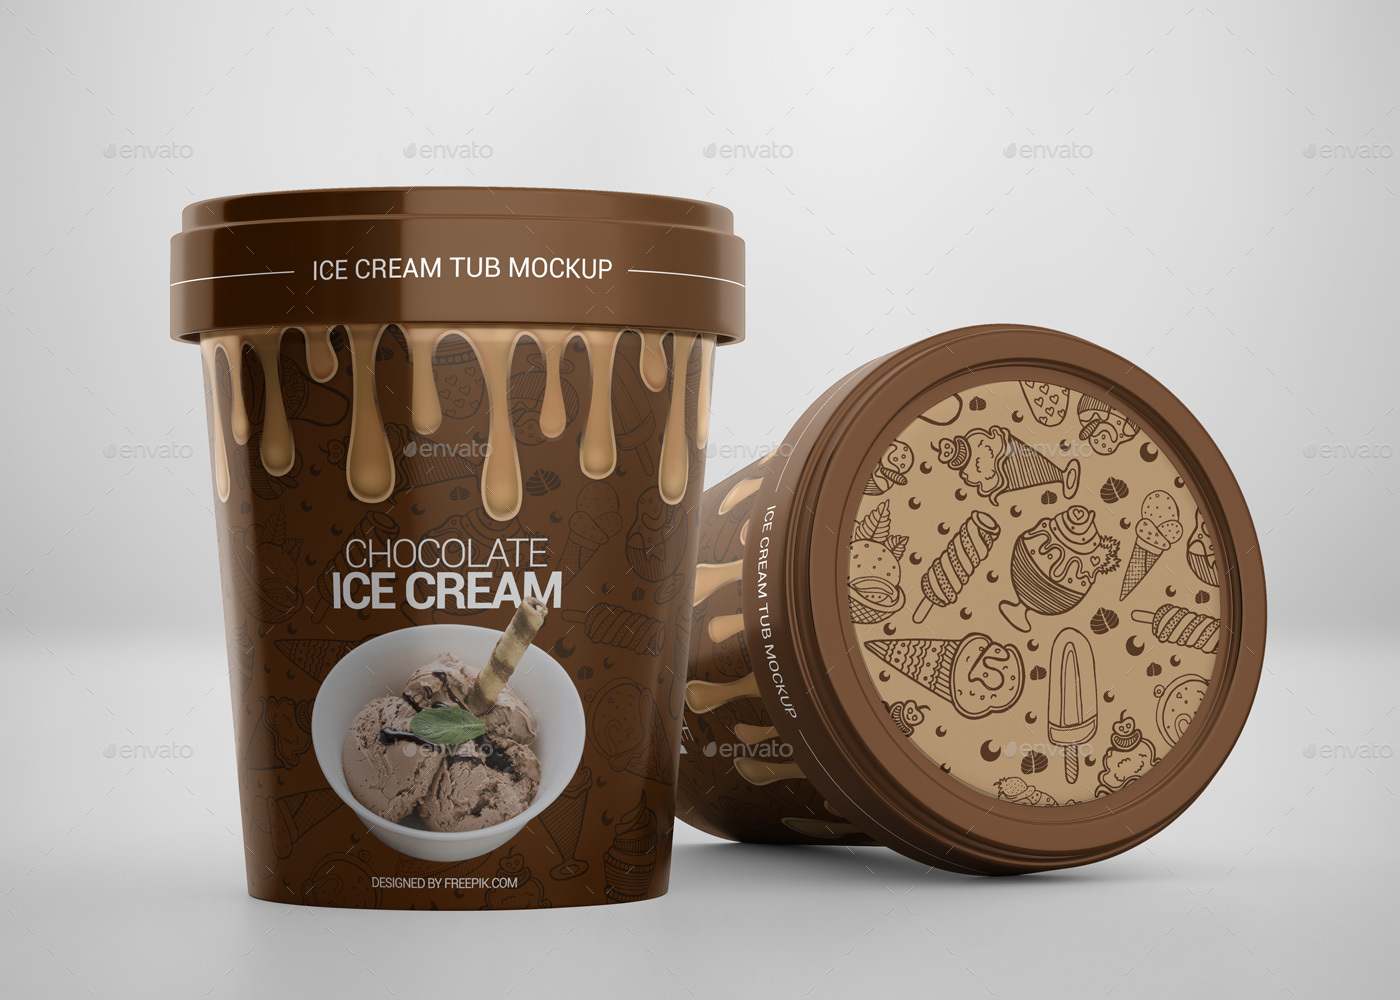 Download Ice Cream Tub Mockup by Pixelica21 | GraphicRiver